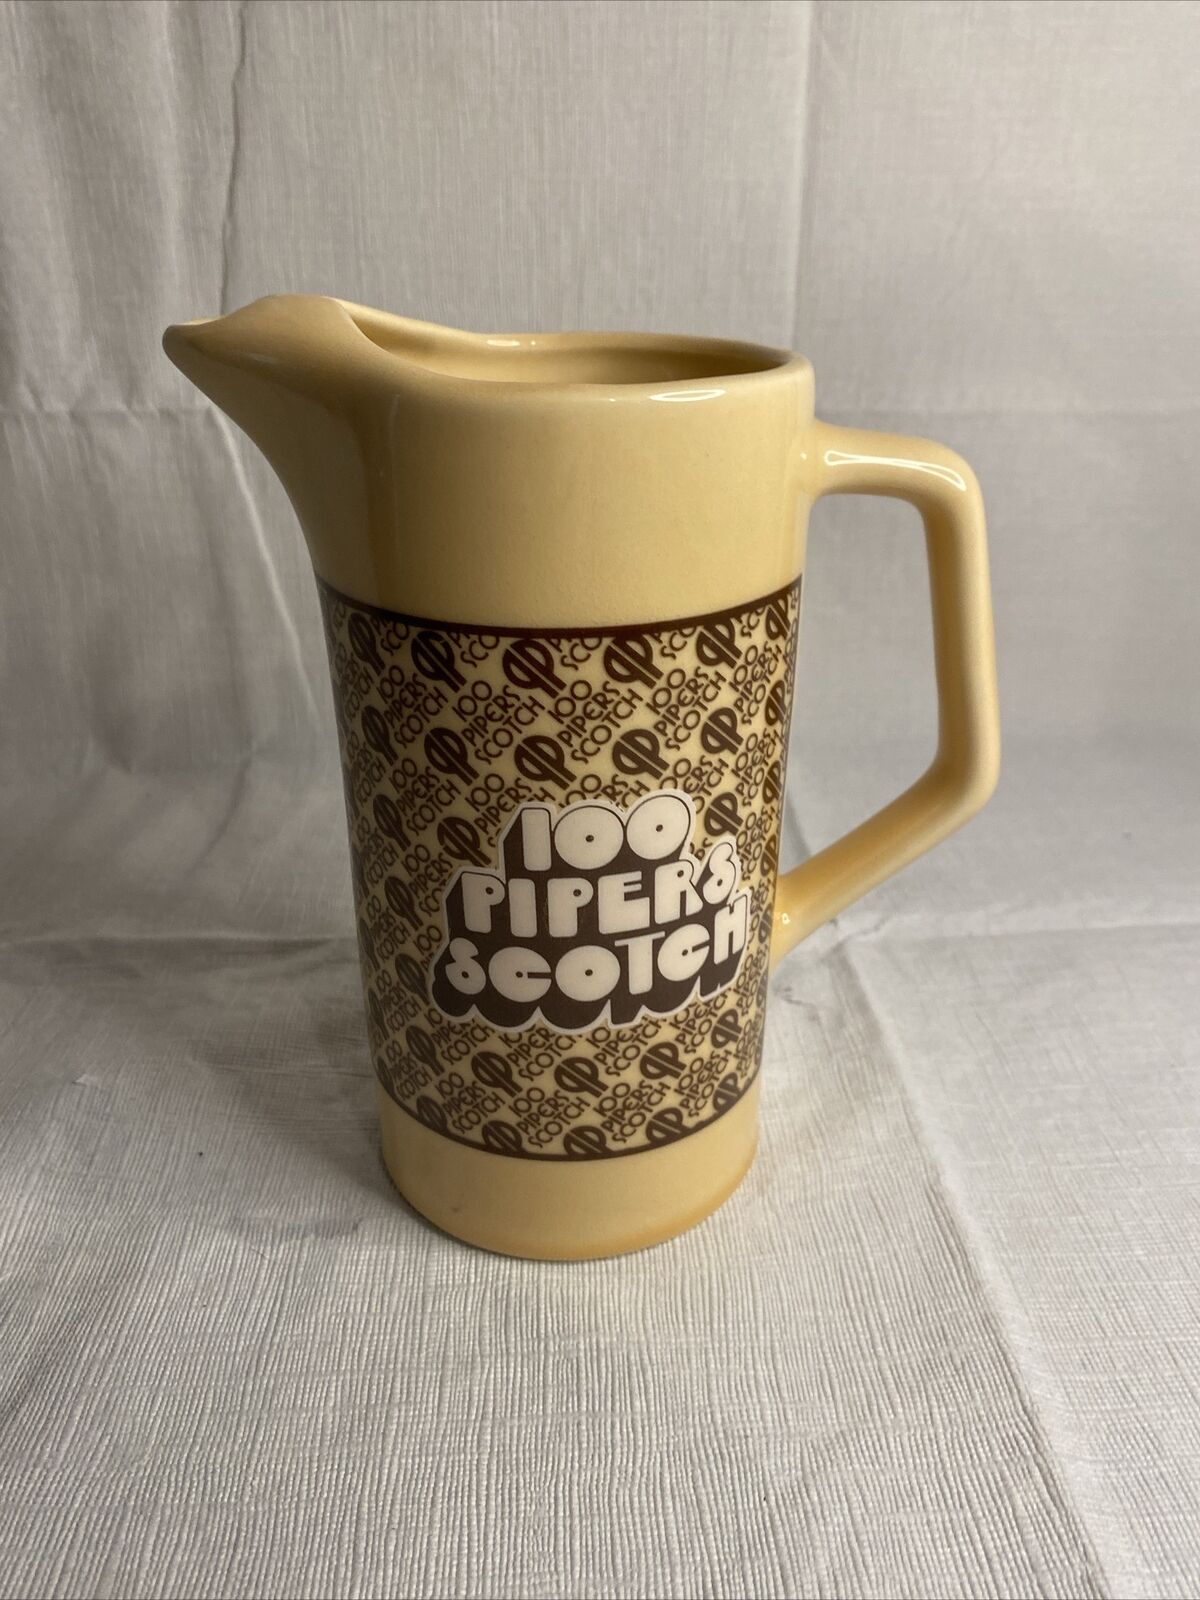 Vintage Seagrams 100 Pipers Scotch Whiskey Ceramic Pitcher MCM brown jug mug